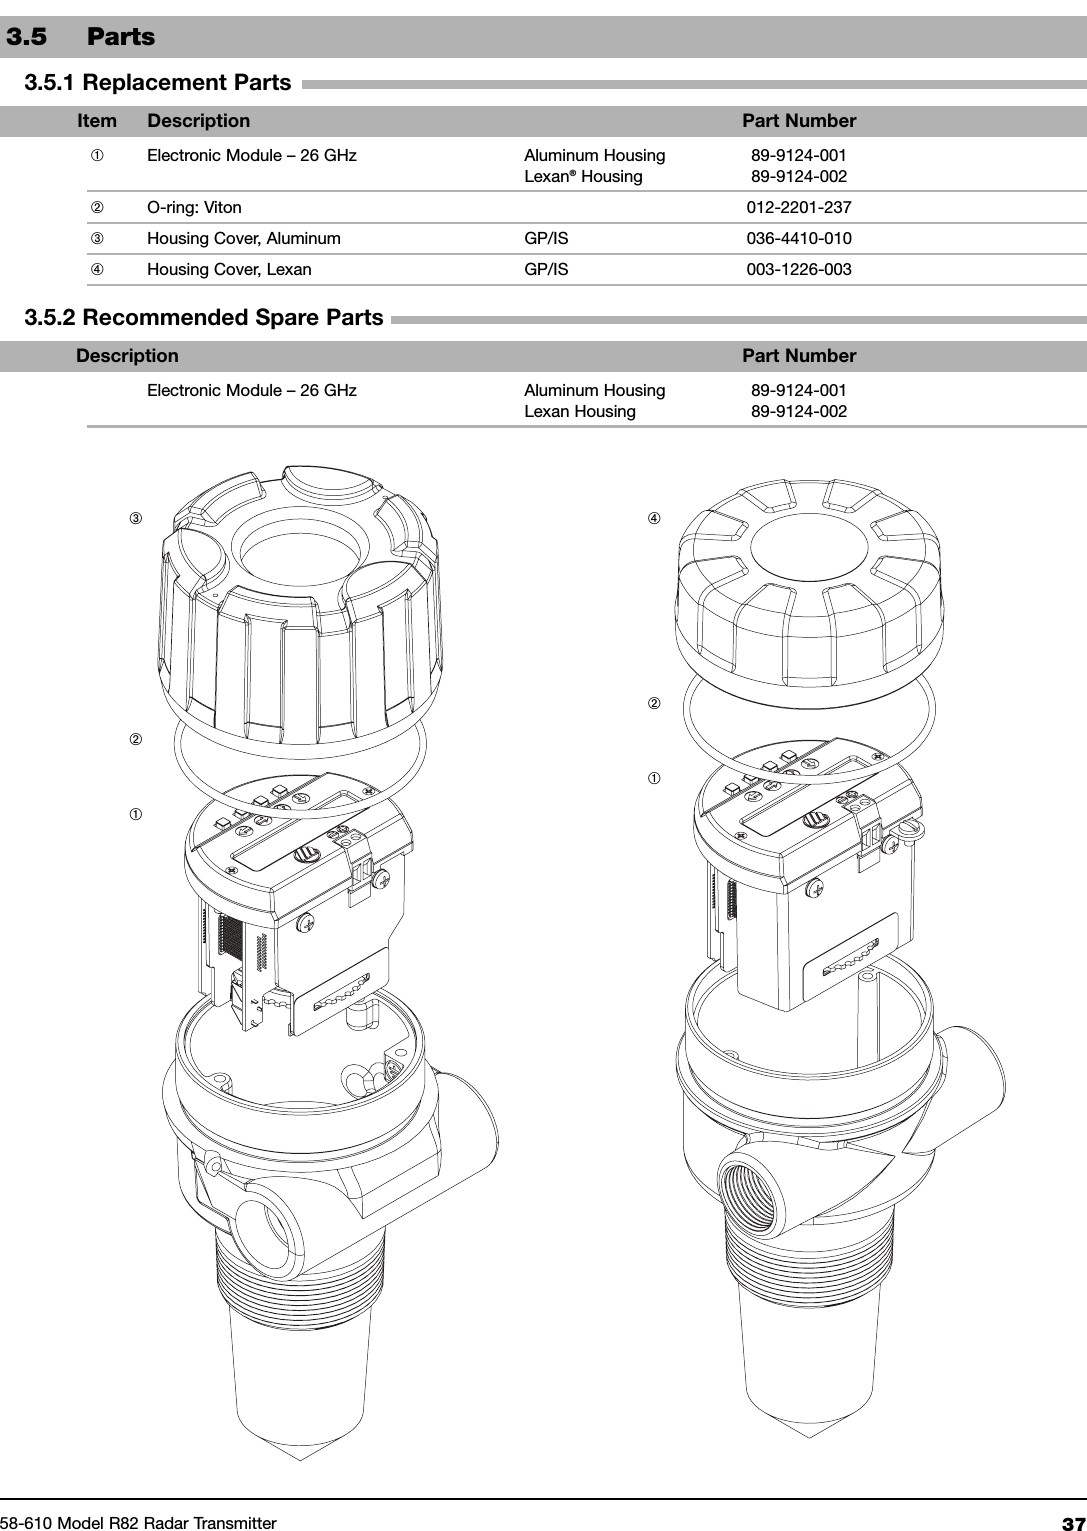 3758-610 Model R82 Radar Transmitter3.5 Parts3.5.1 Replacement PartsItem Description Part Number➀Electronic Module – 26 GHz Aluminum Housing 89-9124-001Lexan®Housing 89-9124-002➁O-ring: Viton 012-2201-237➂Housing Cover, Aluminum GP/IS 036-4410-010➃Housing Cover, Lexan GP/IS 003-1226-0033.5.2 Recommended Spare PartsDescription Part NumberElectronic Module – 26 GHz Aluminum Housing 89-9124-001Lexan Housing 89-9124-002➂➁➀➃➁➀